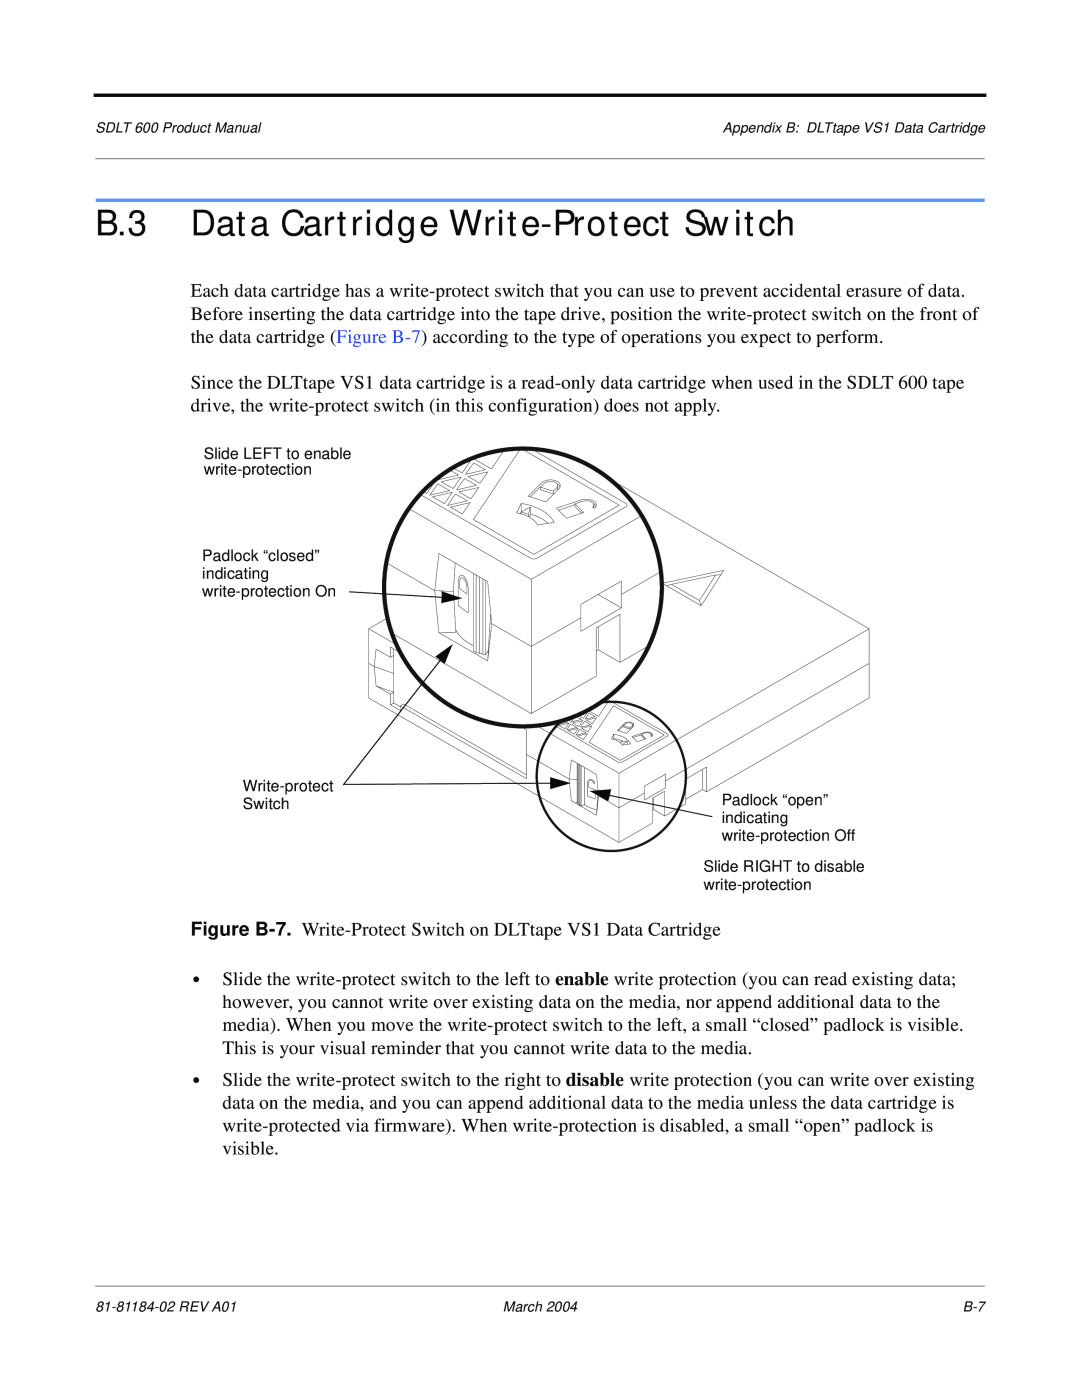 Tandberg Data 600 manual B.3 Data Cartridge Write-Protect Switch 